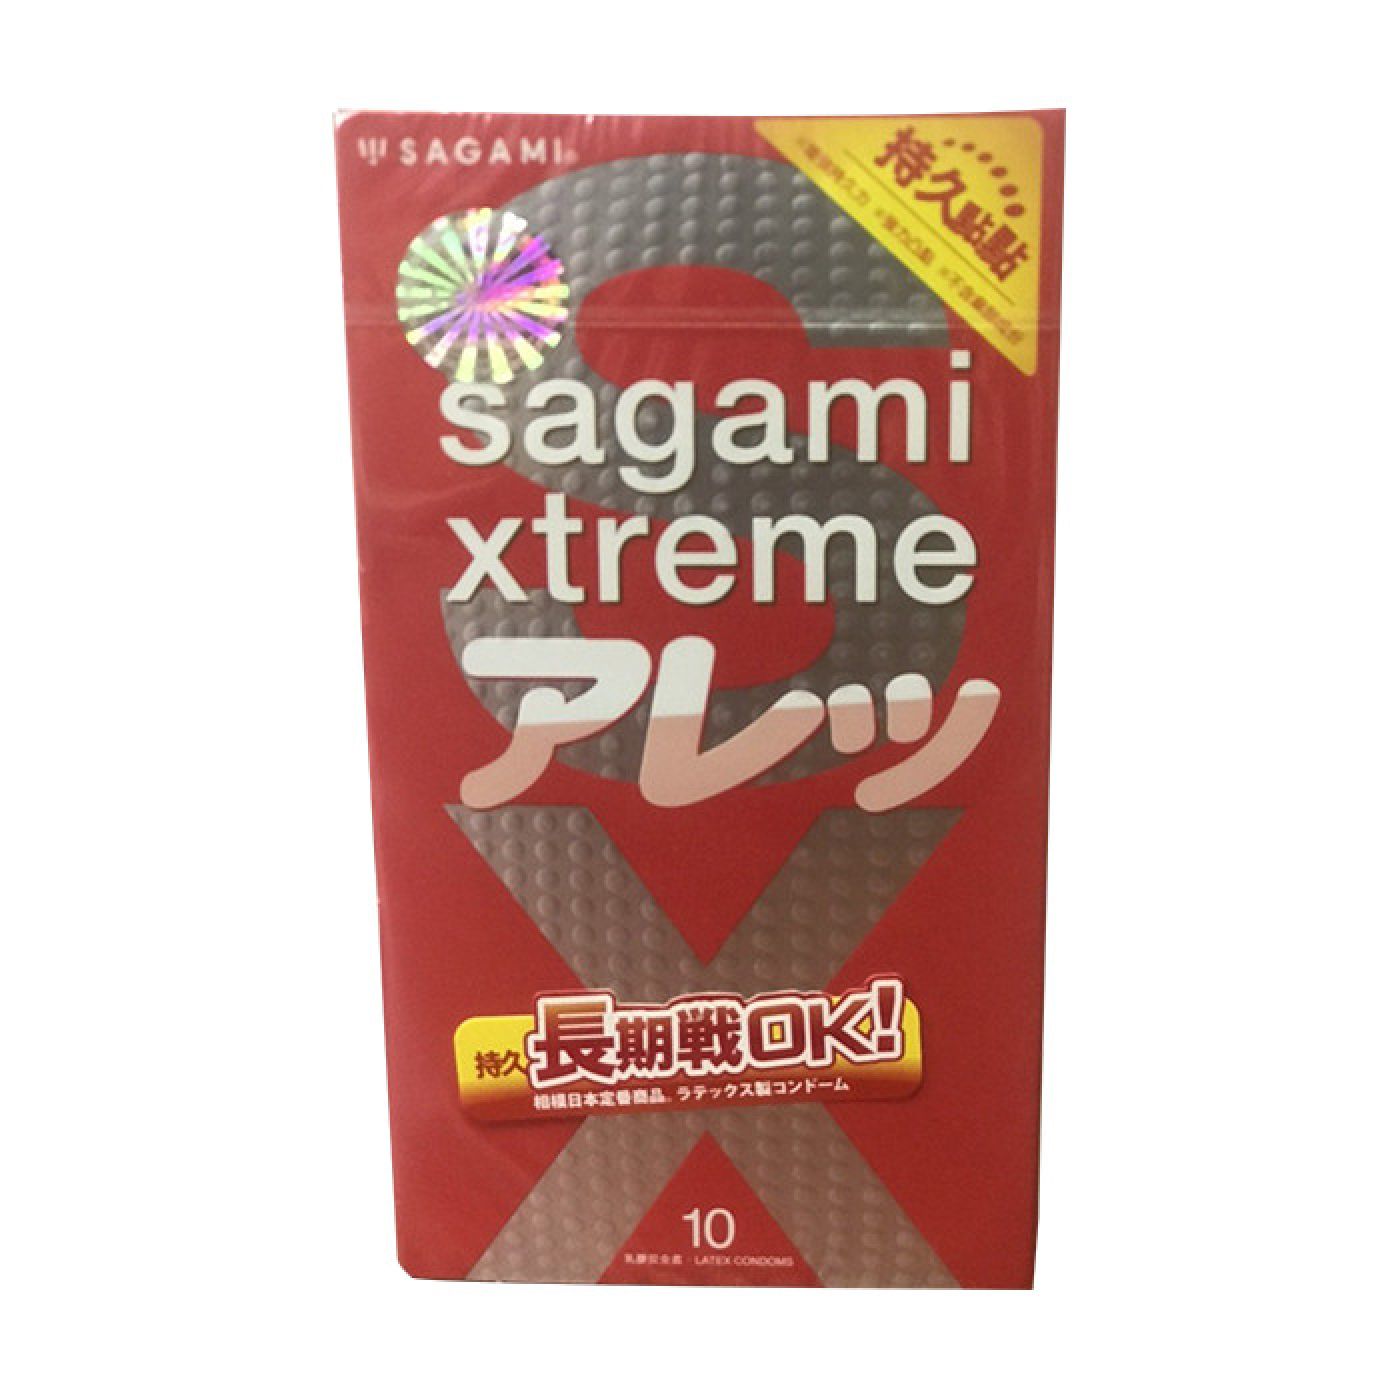 Bao cao su Sagami Xtreme Dotty G Feel Long ( Hộp 10 chiếc )